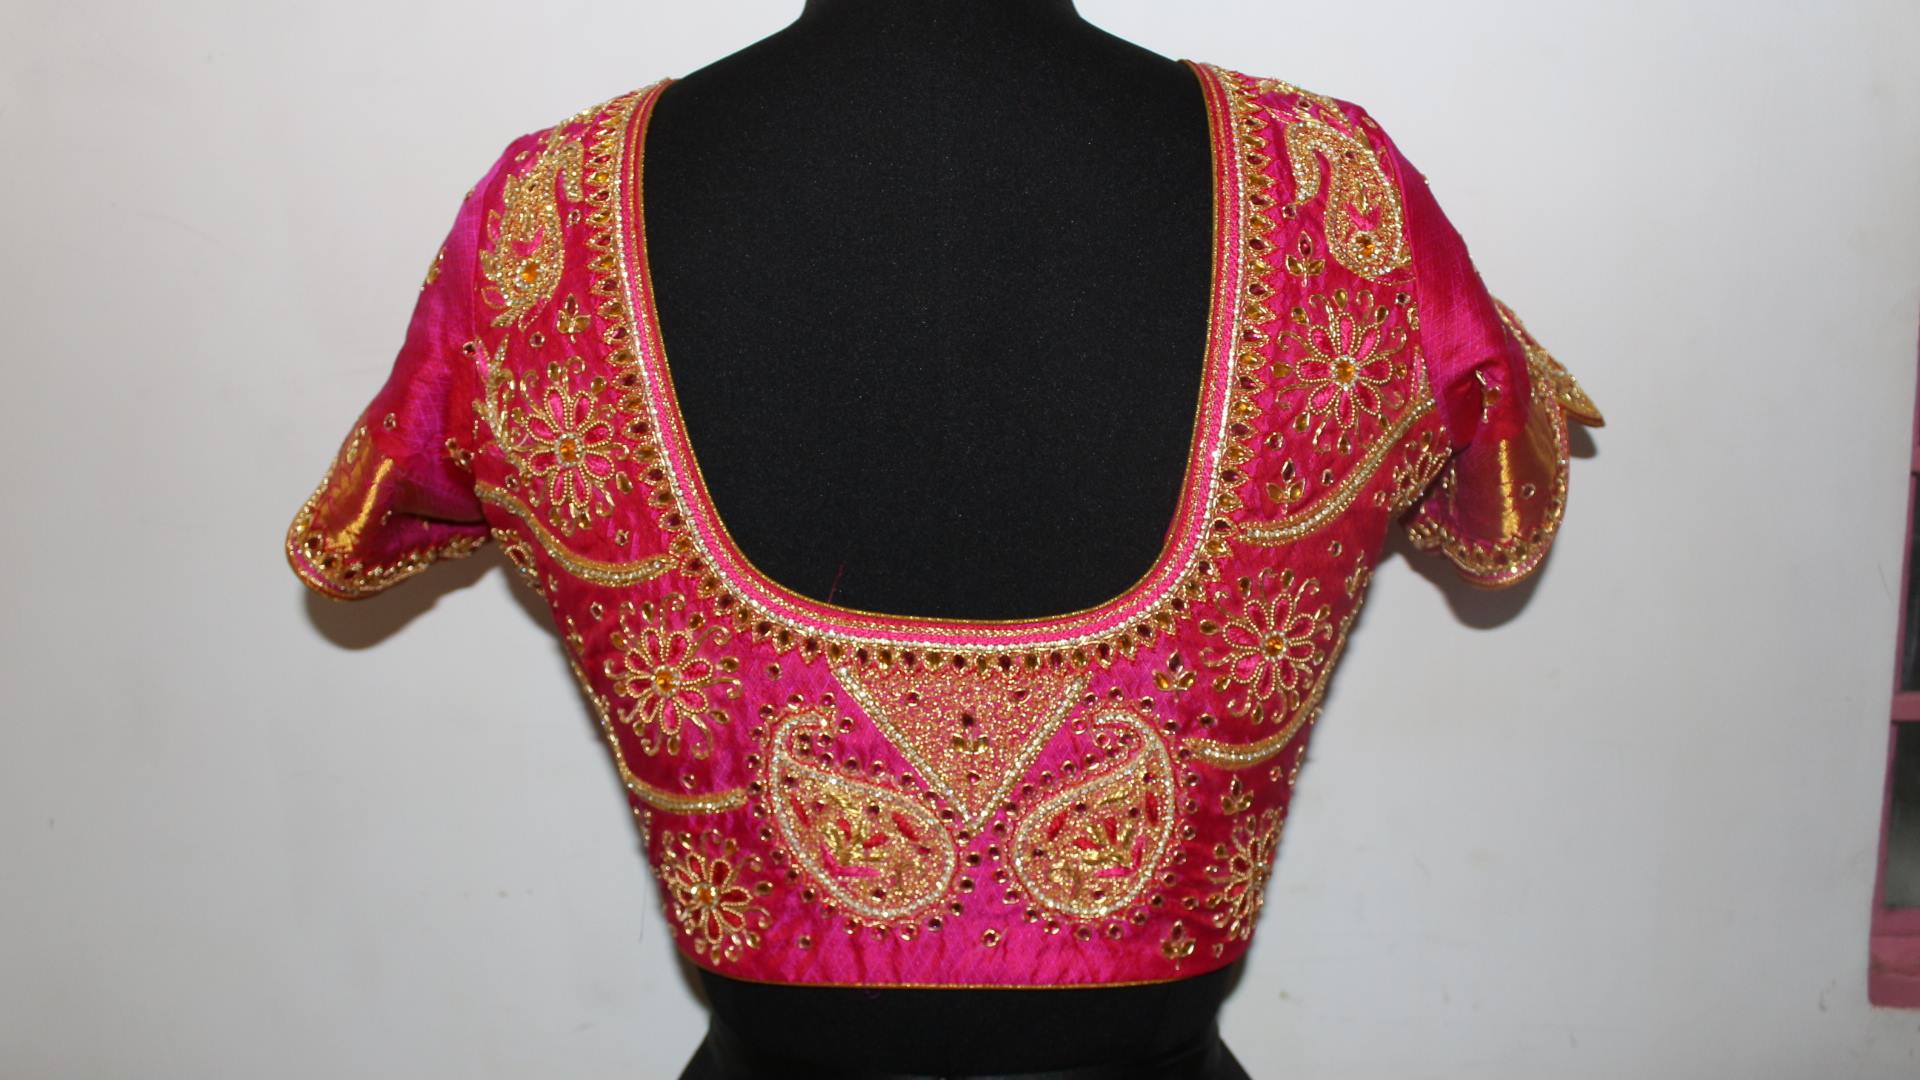  Rosado blouse designs-img6